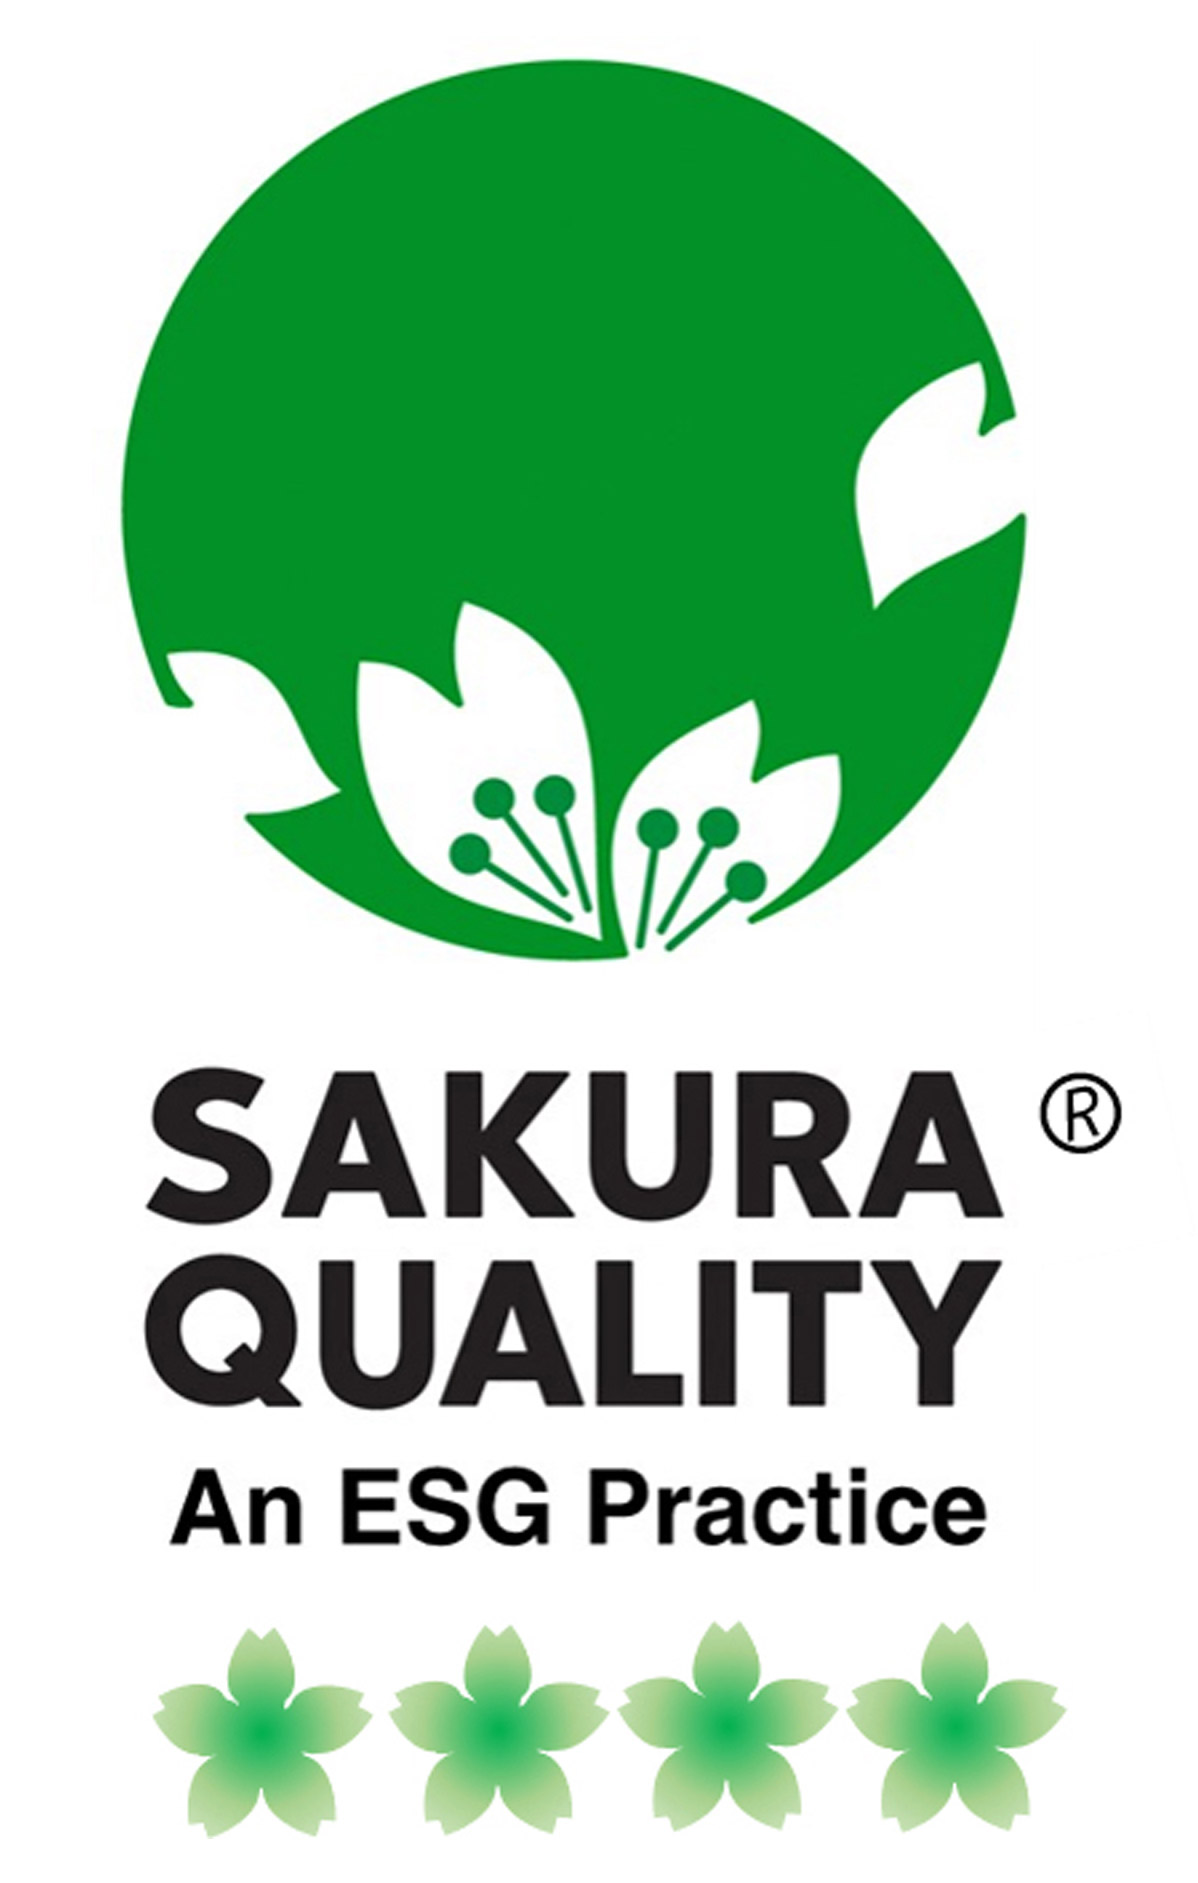 SDGsを実践する宿泊施設を認定する「Sakura Quality An ESG Practice」認証制度